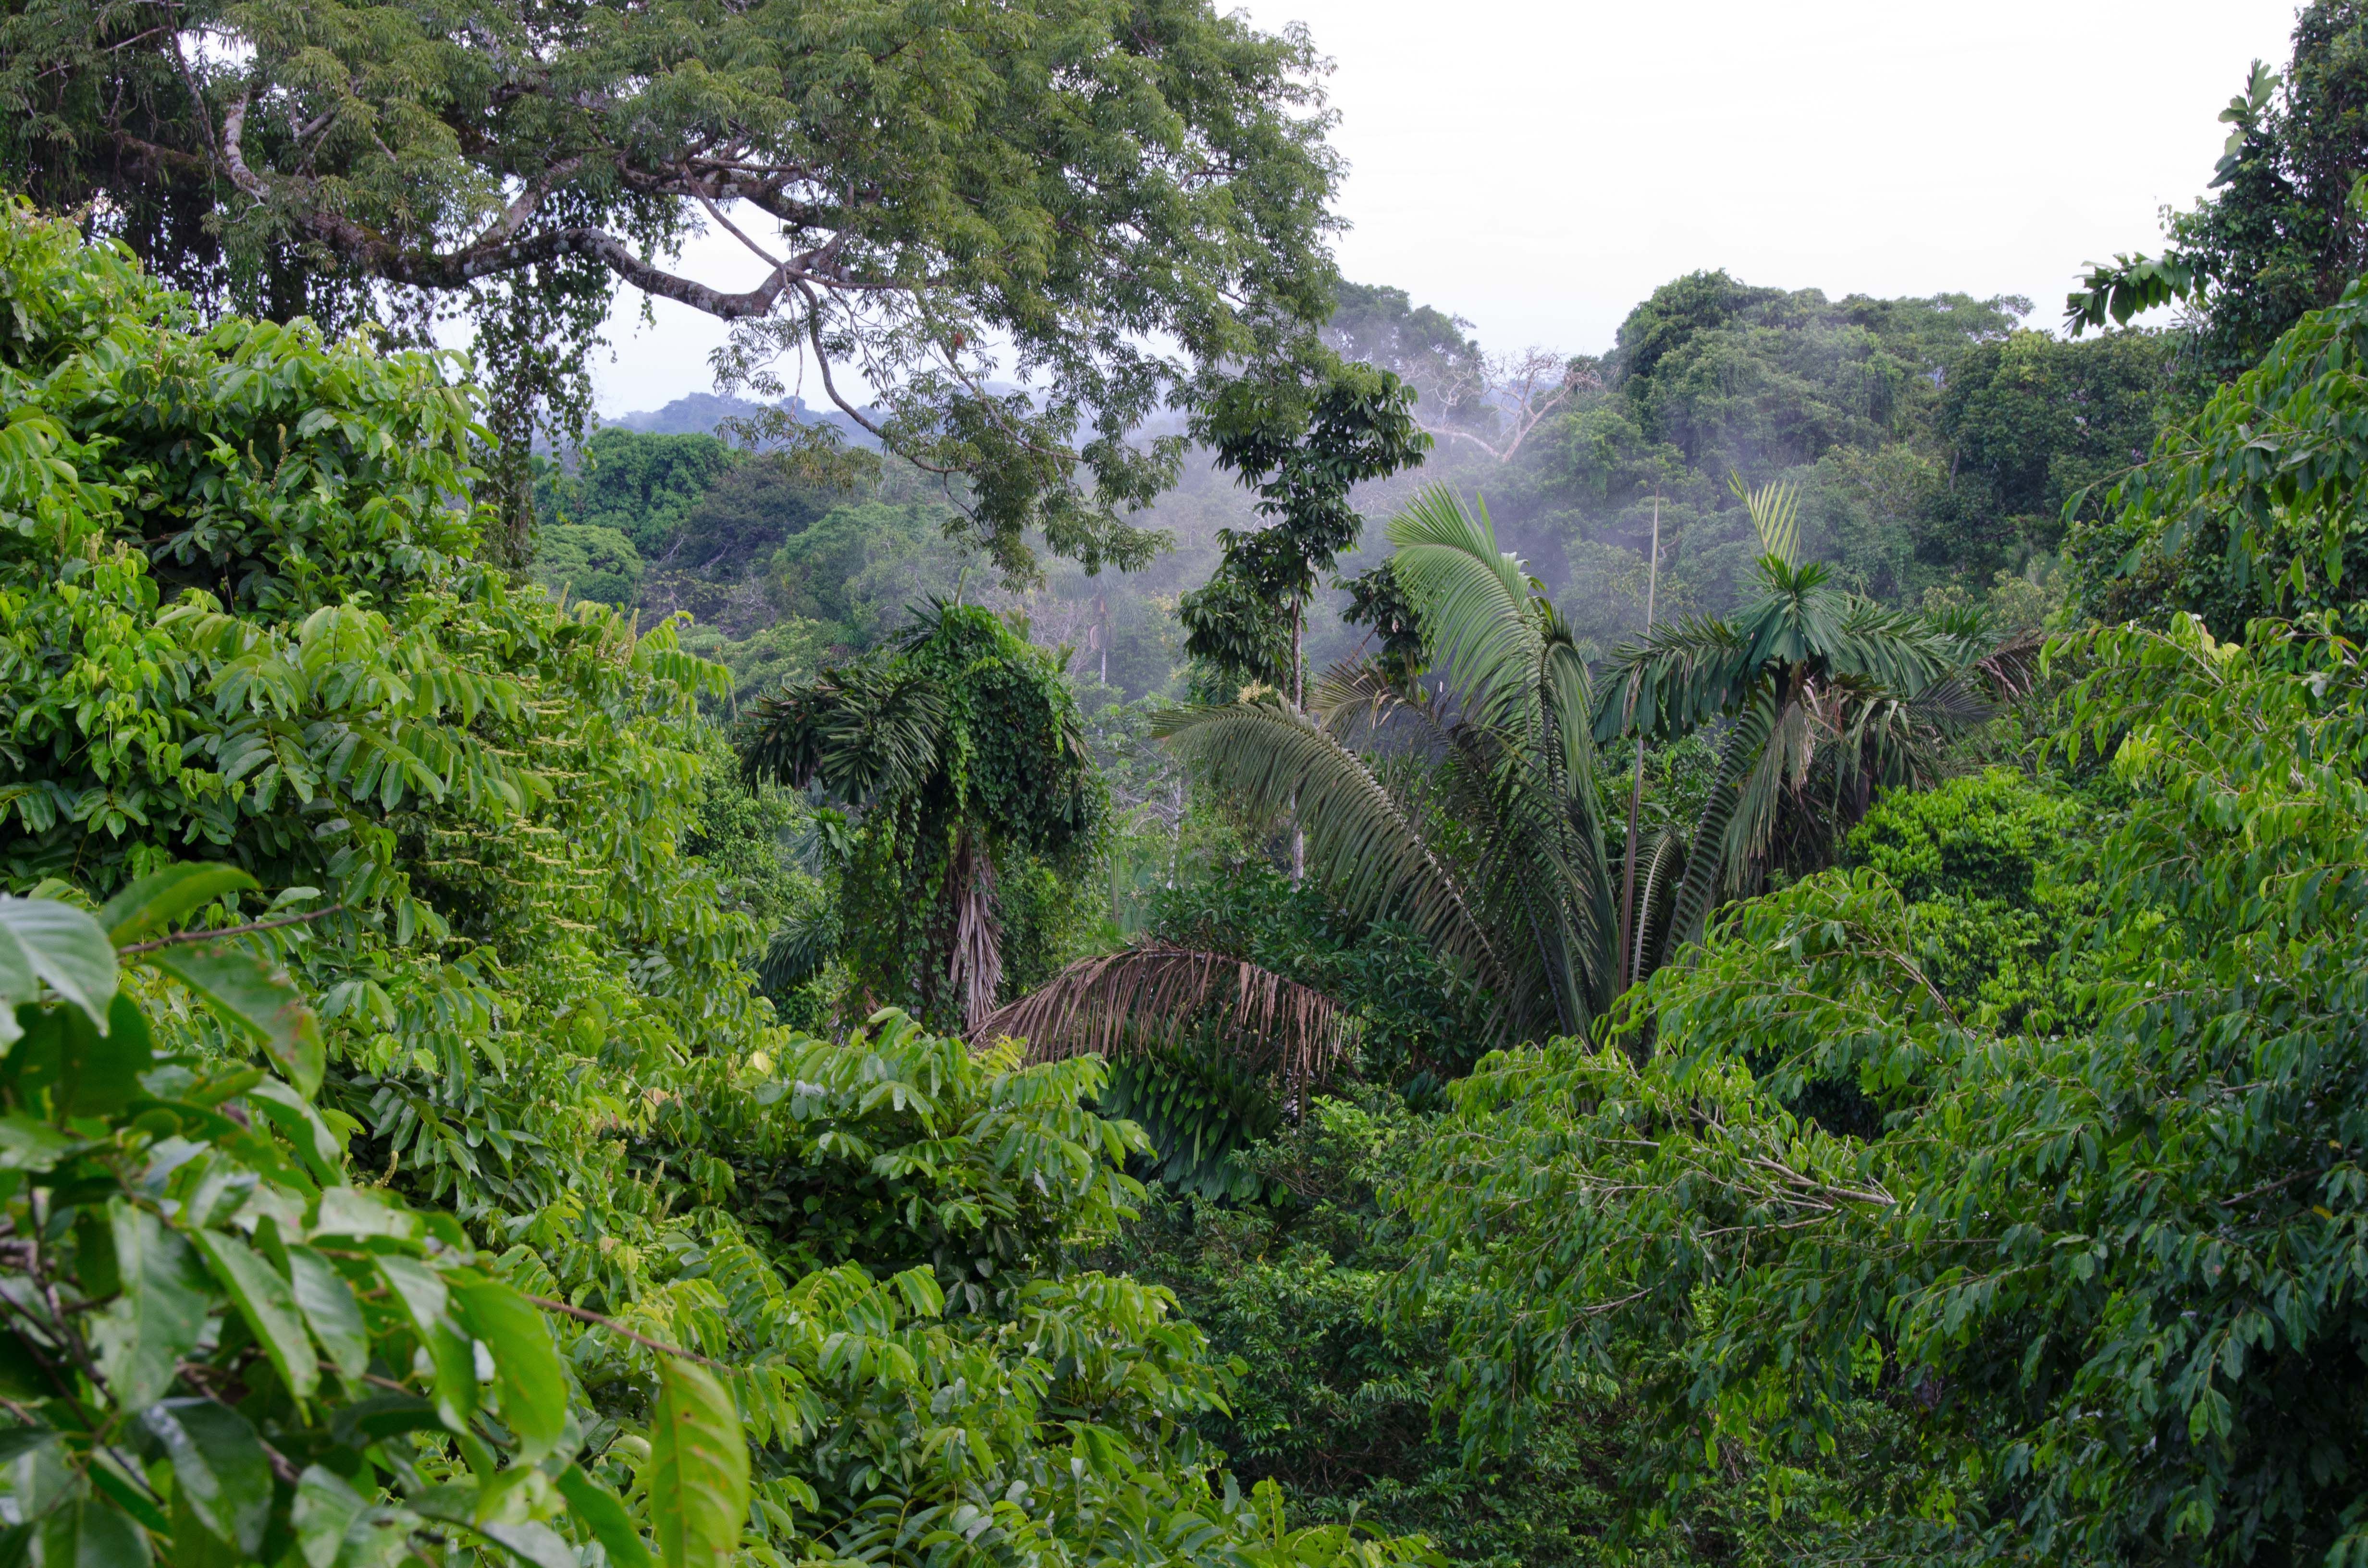 Джунгли бразилии. Бразилия джунгли амазонки. Колумбия Амазонские джунгли Колумбии. Тропический лес Бразилии. Тропические леса амазонки в Бразилии.